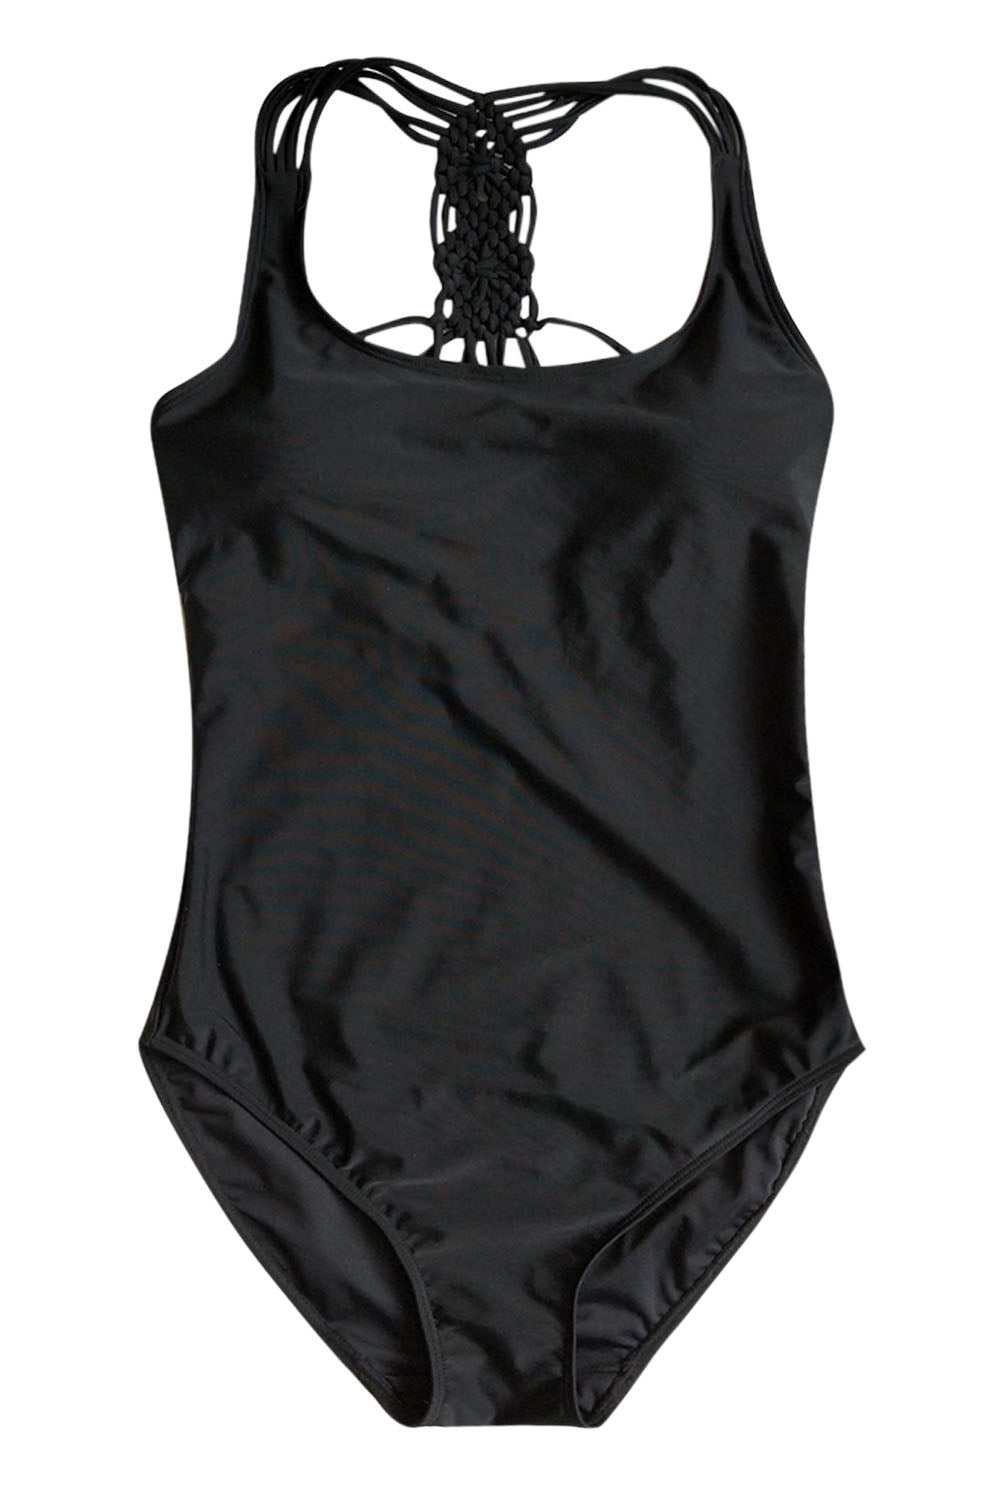 Iyasson Womens 3D Tiger Pattern Print Black One-piece Swimsuit